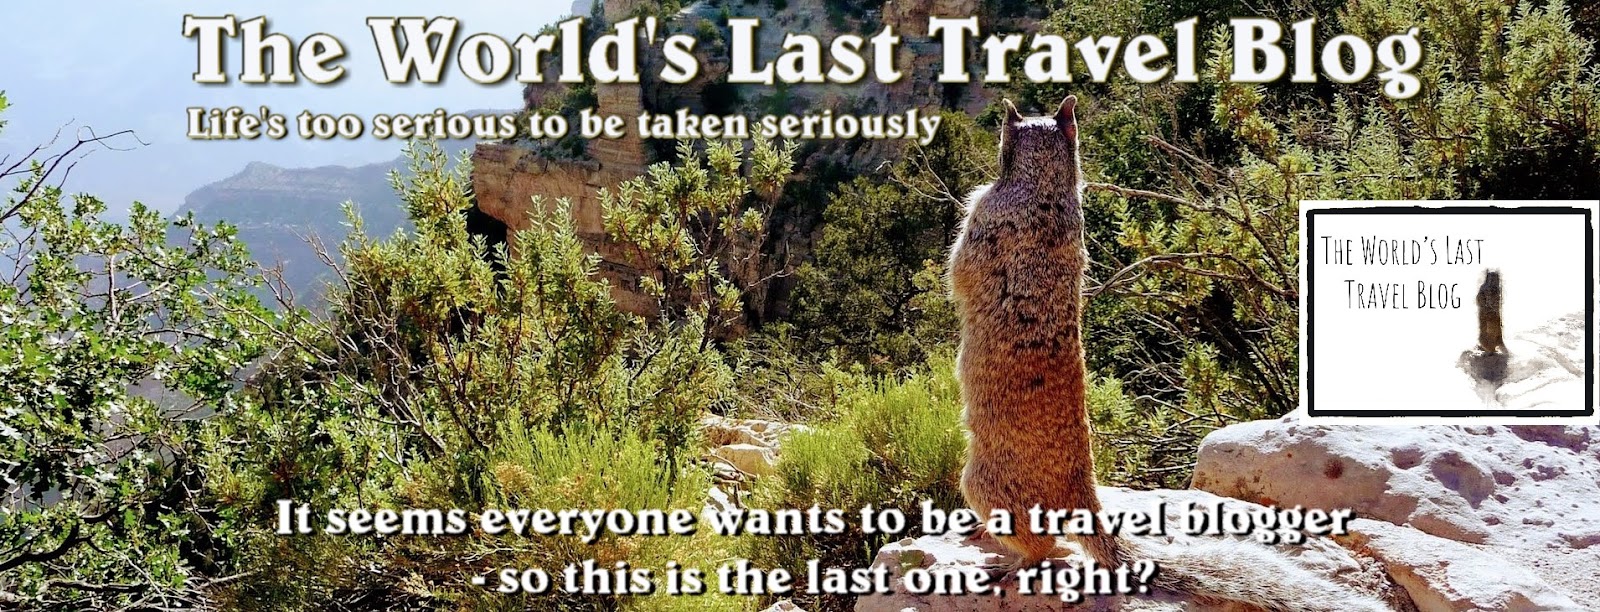 The World's Last Travel Blog